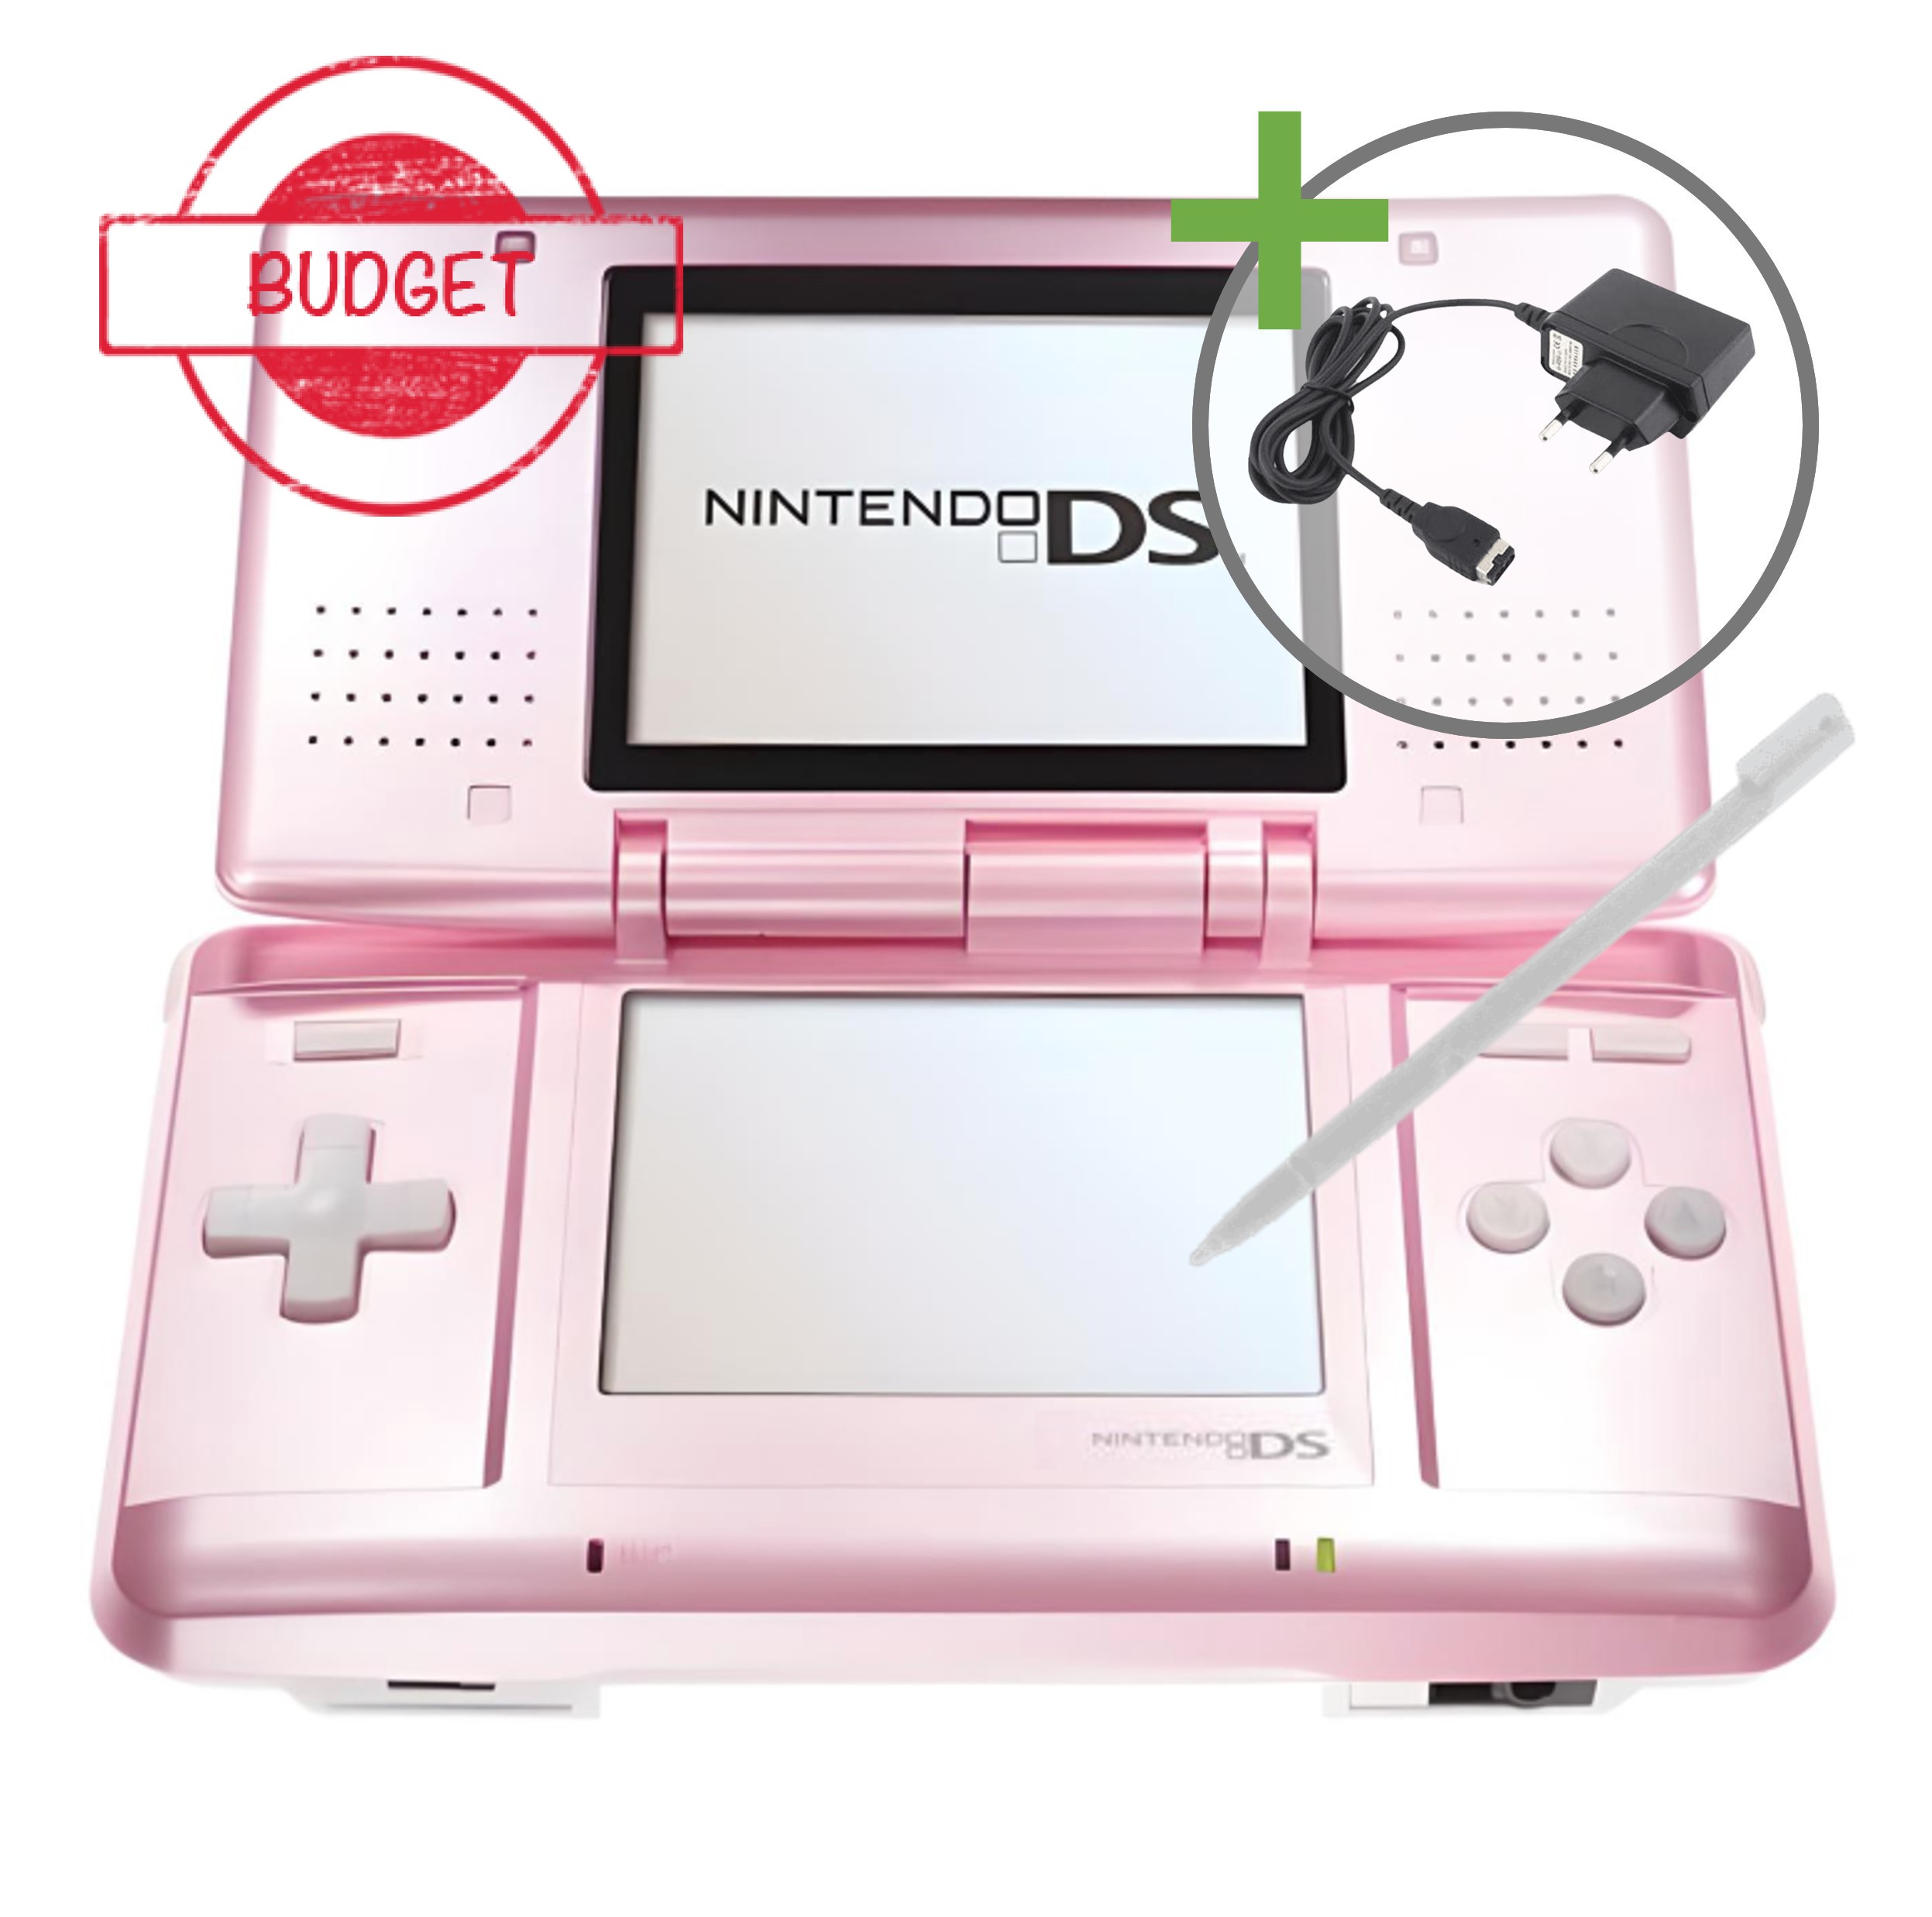 Nintendo DS Original - Pearl Pink - Budget - Nintendo DS Hardware